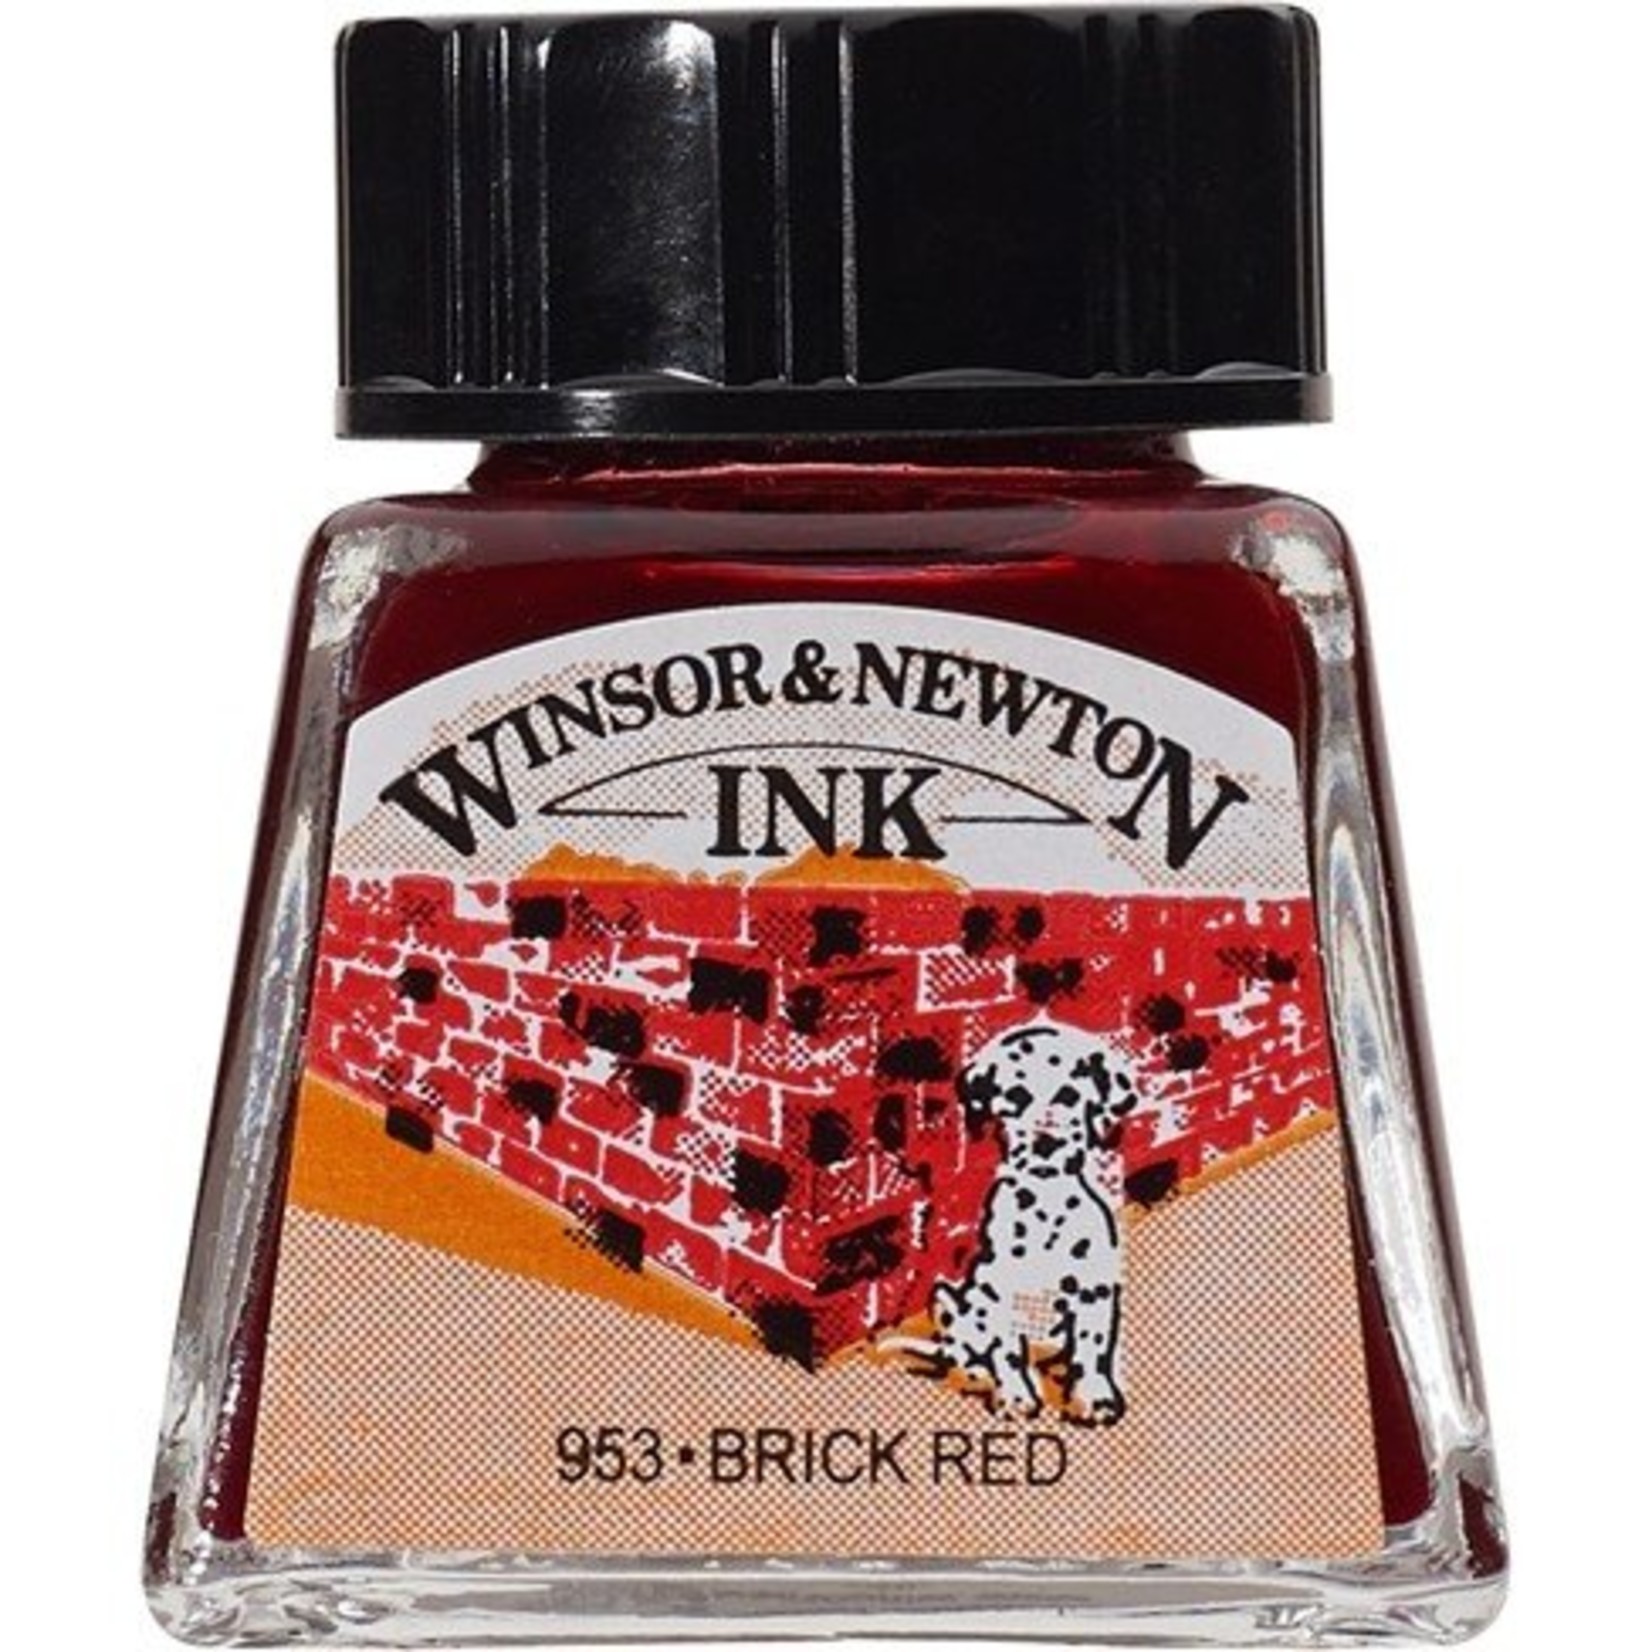 WINSOR NEWTON WINSOR & NEWTON DRAWING INK 14ML BRICK RED